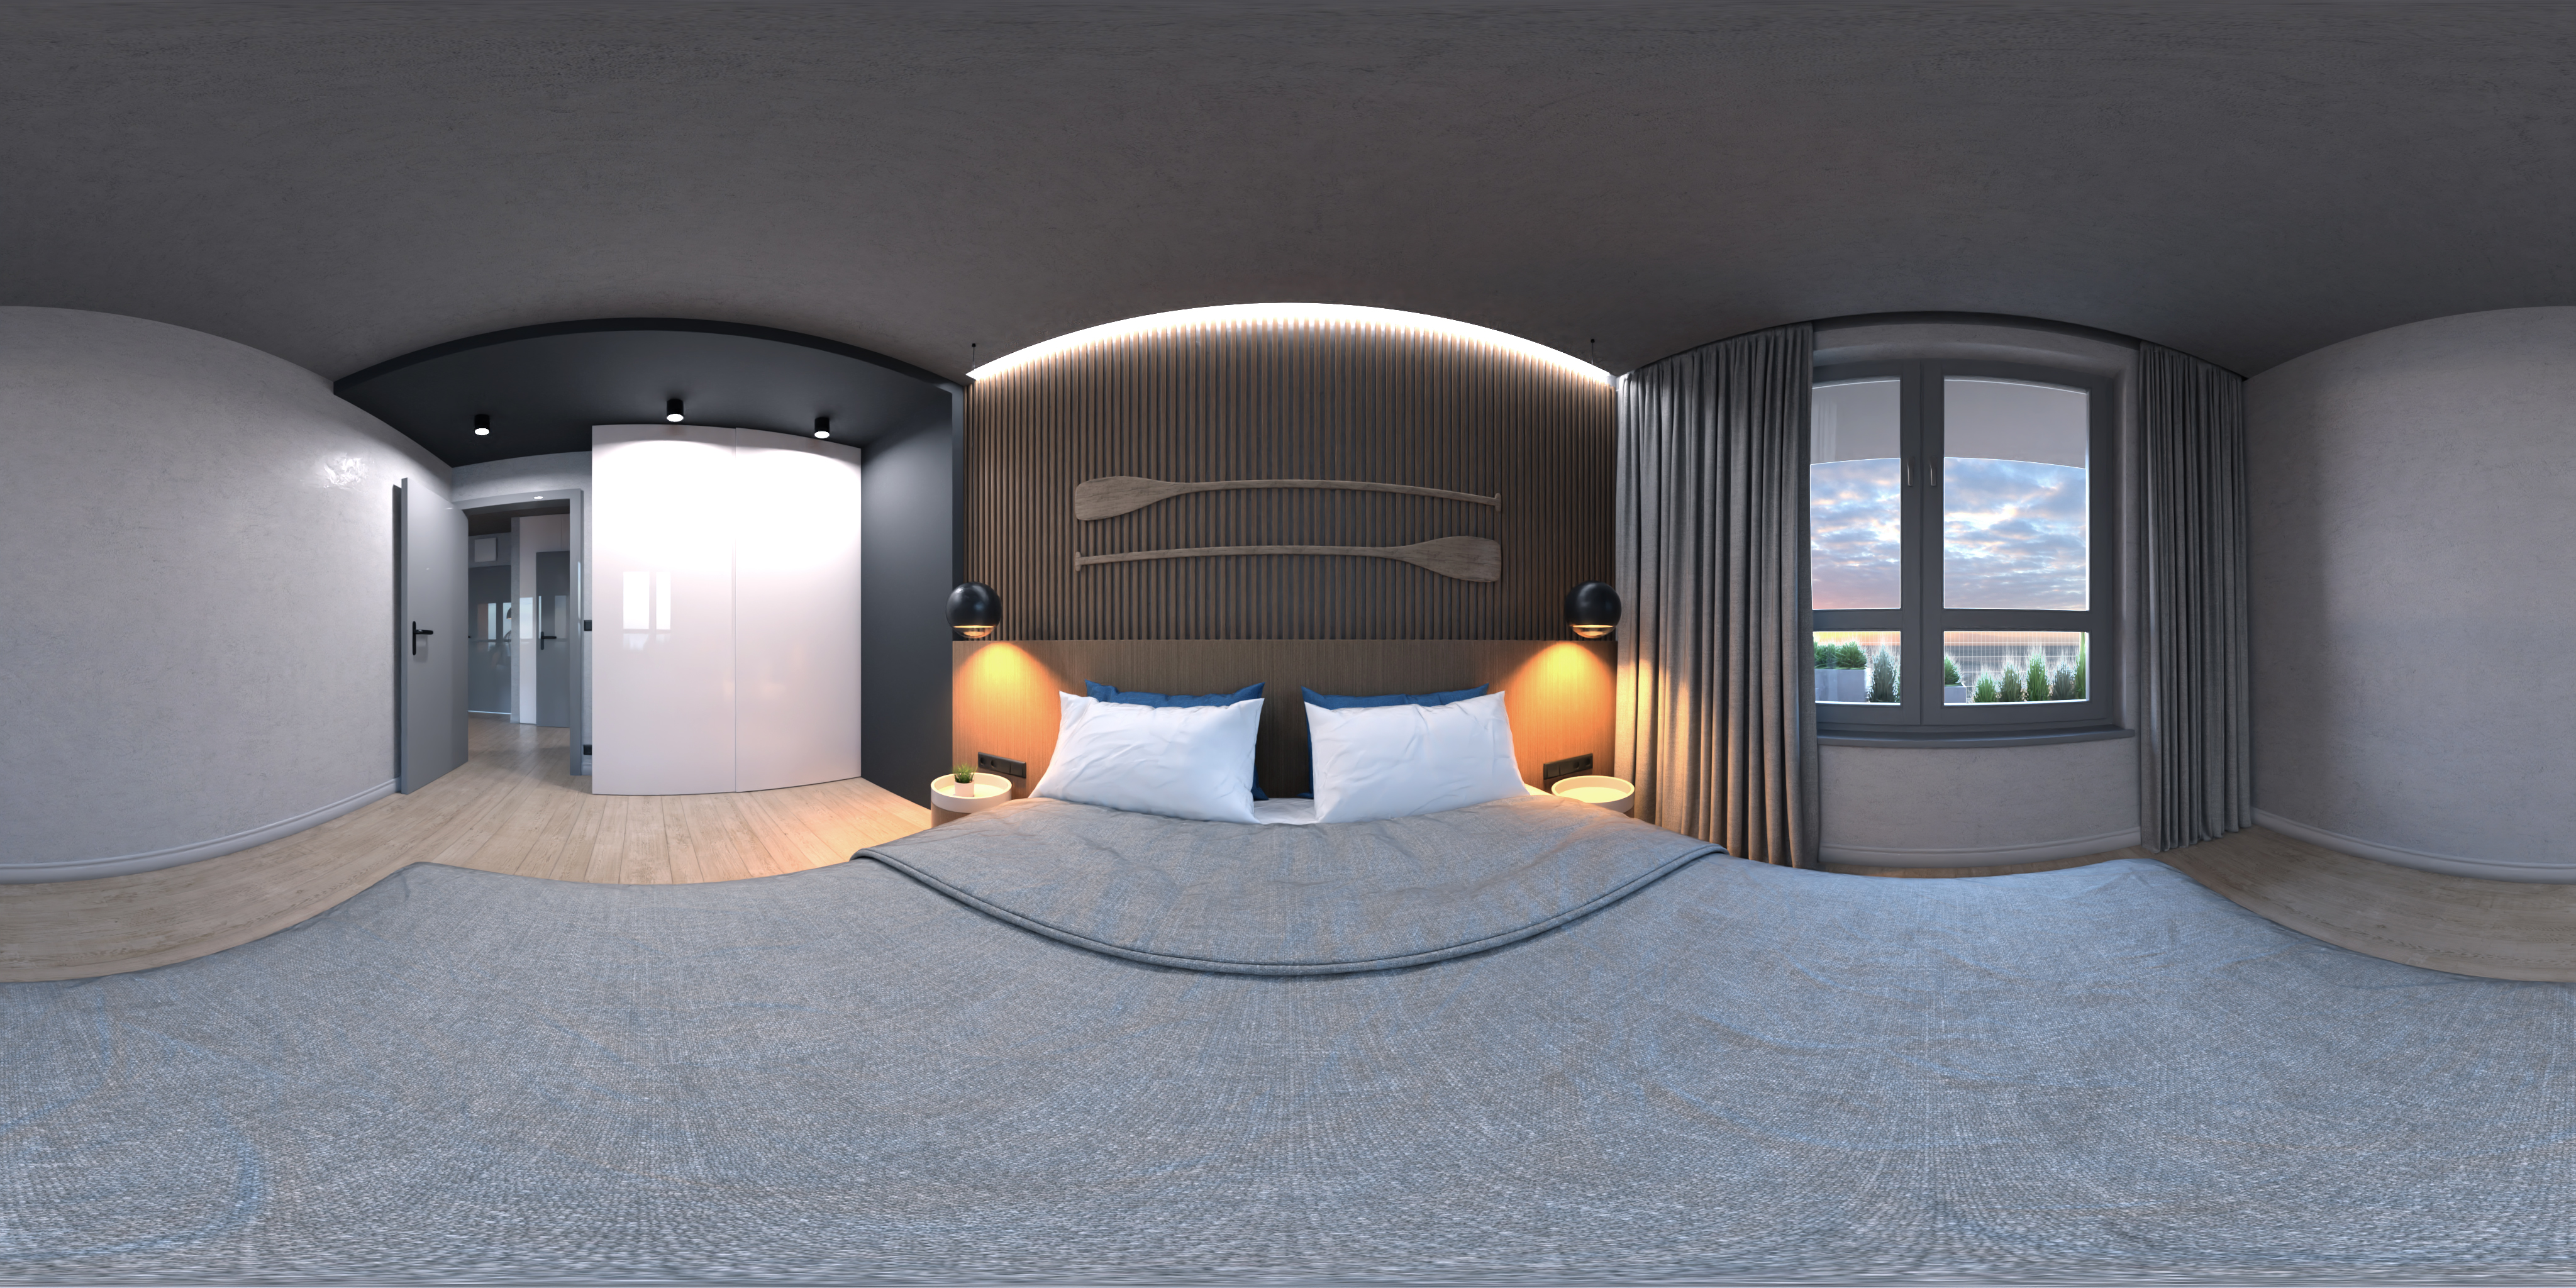 Seaside Apartment by: Modu8, 3D Models by Daz 3D